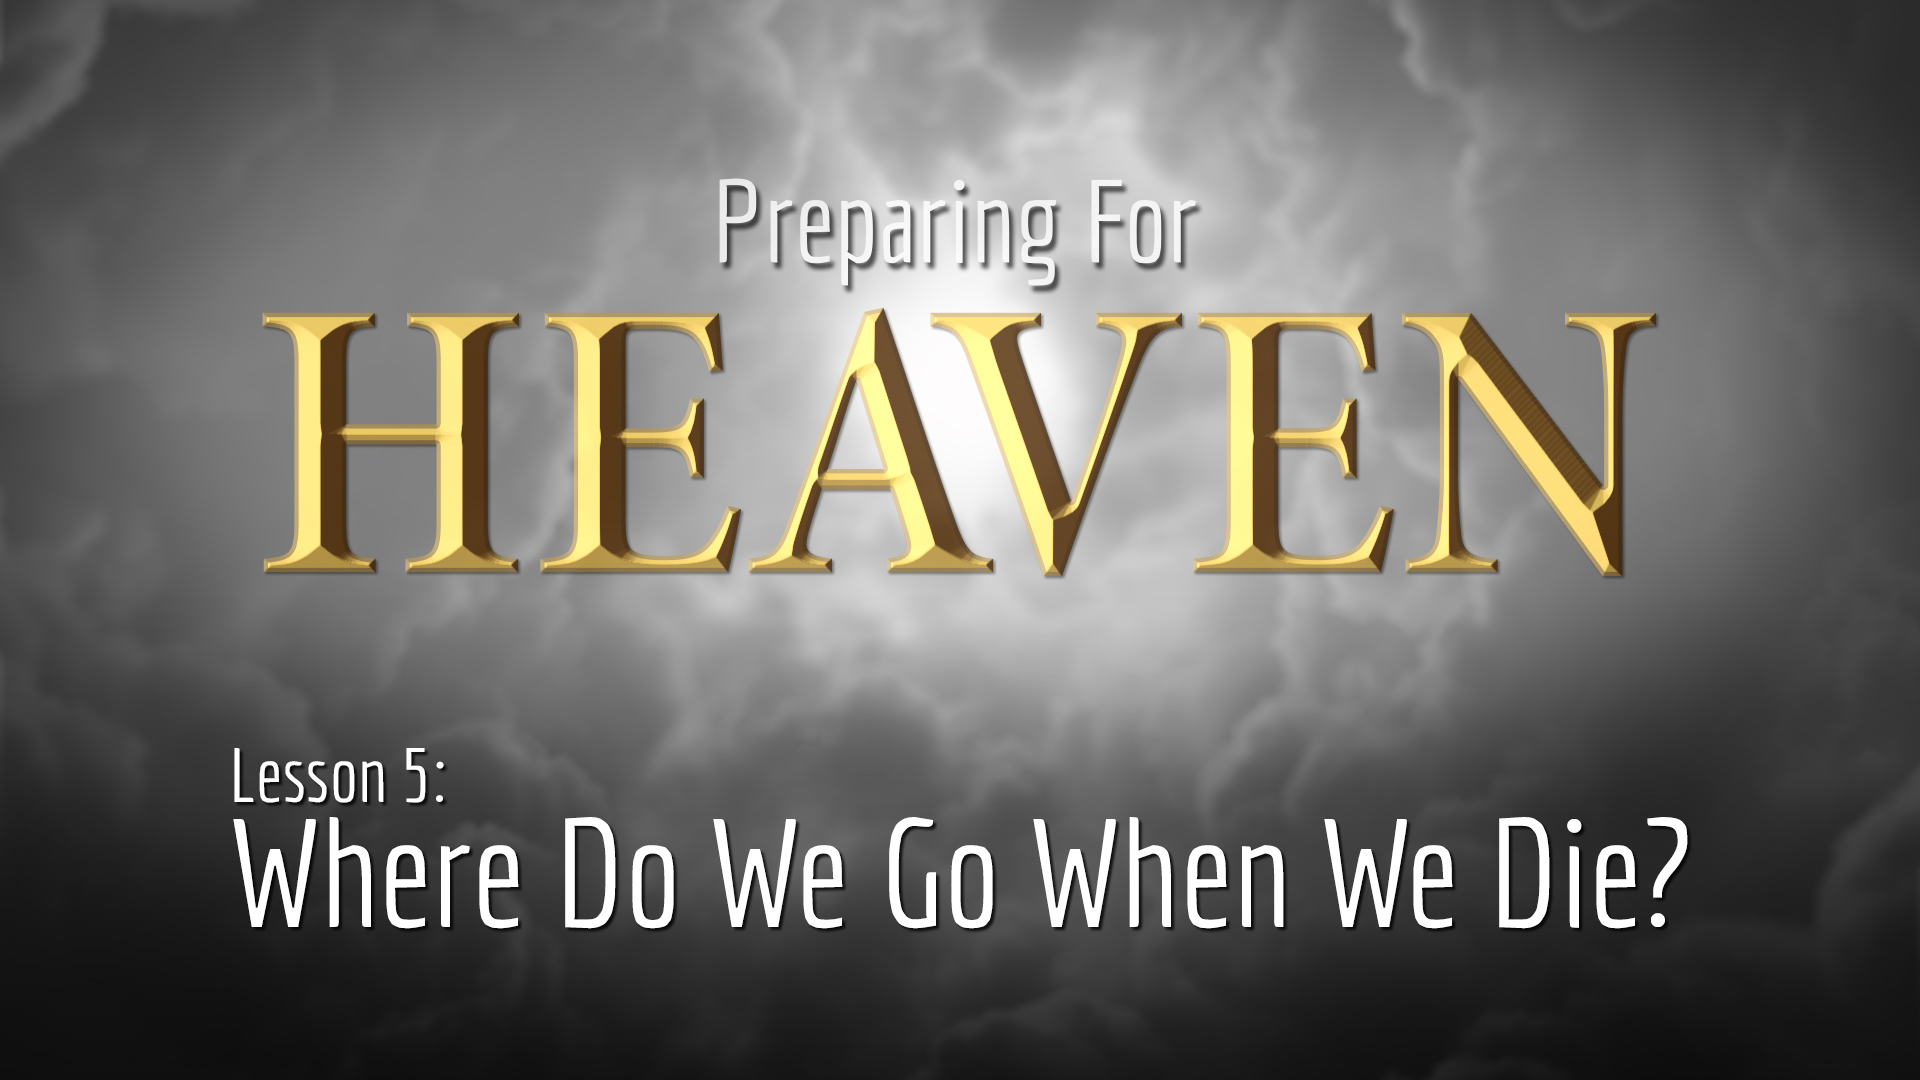 Do We Go to Heaven When We Die?